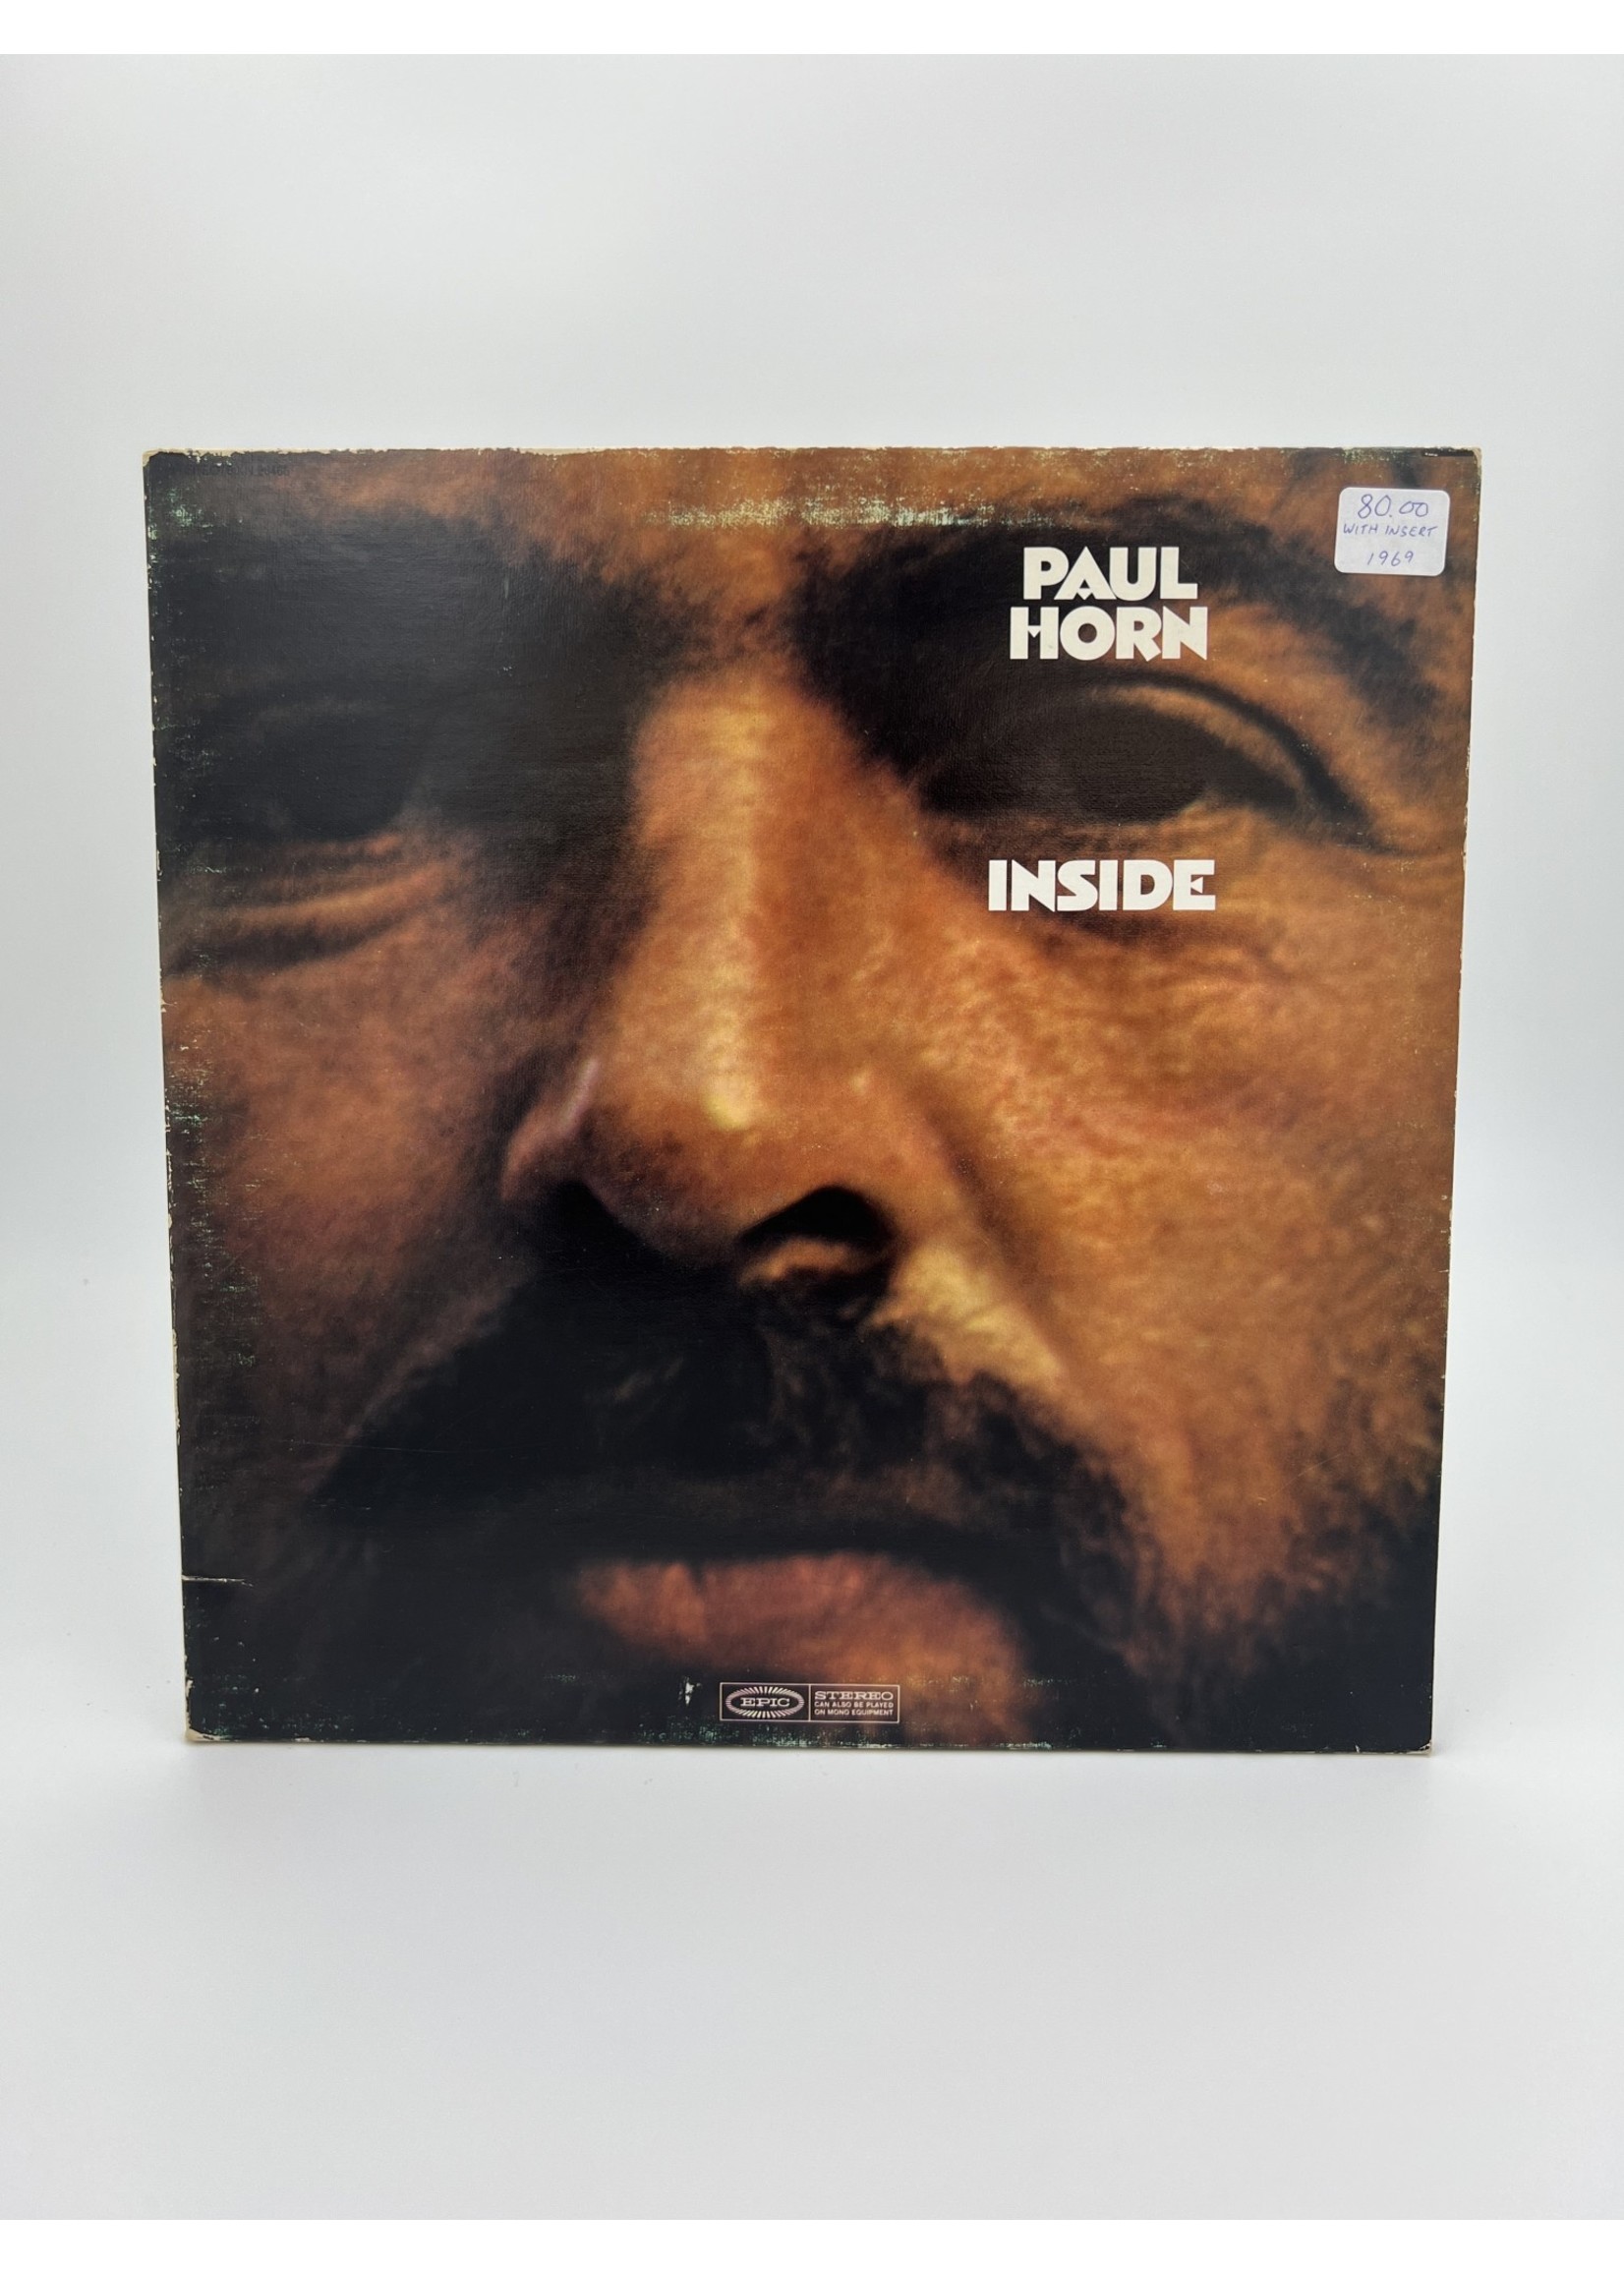 LP Paul Horn Inside Lp Record